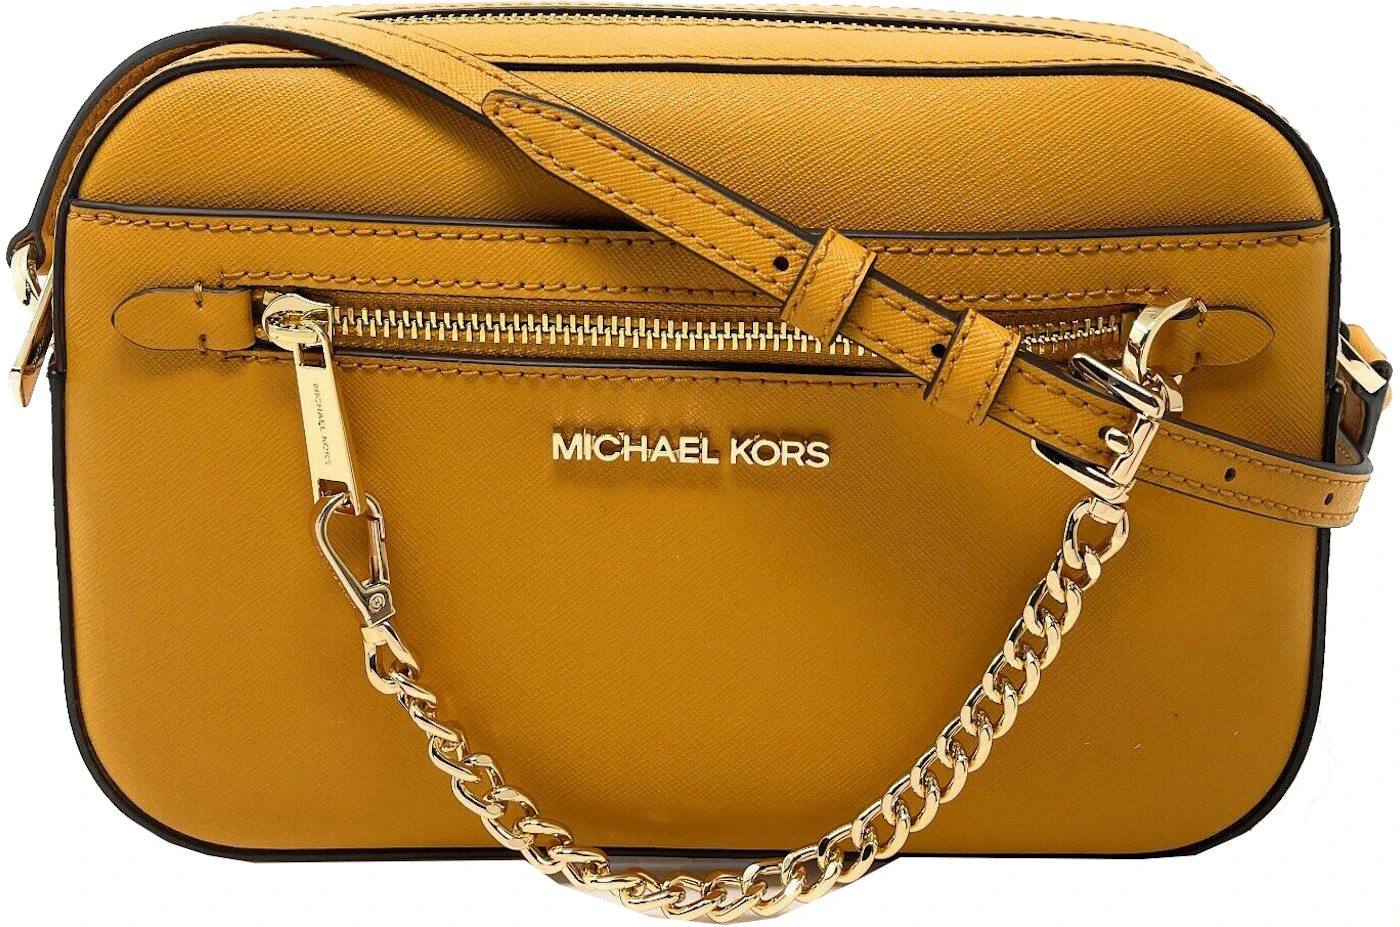 Michael Kors Jet Set Zip Chain Crossbody Bag Large Marigold in